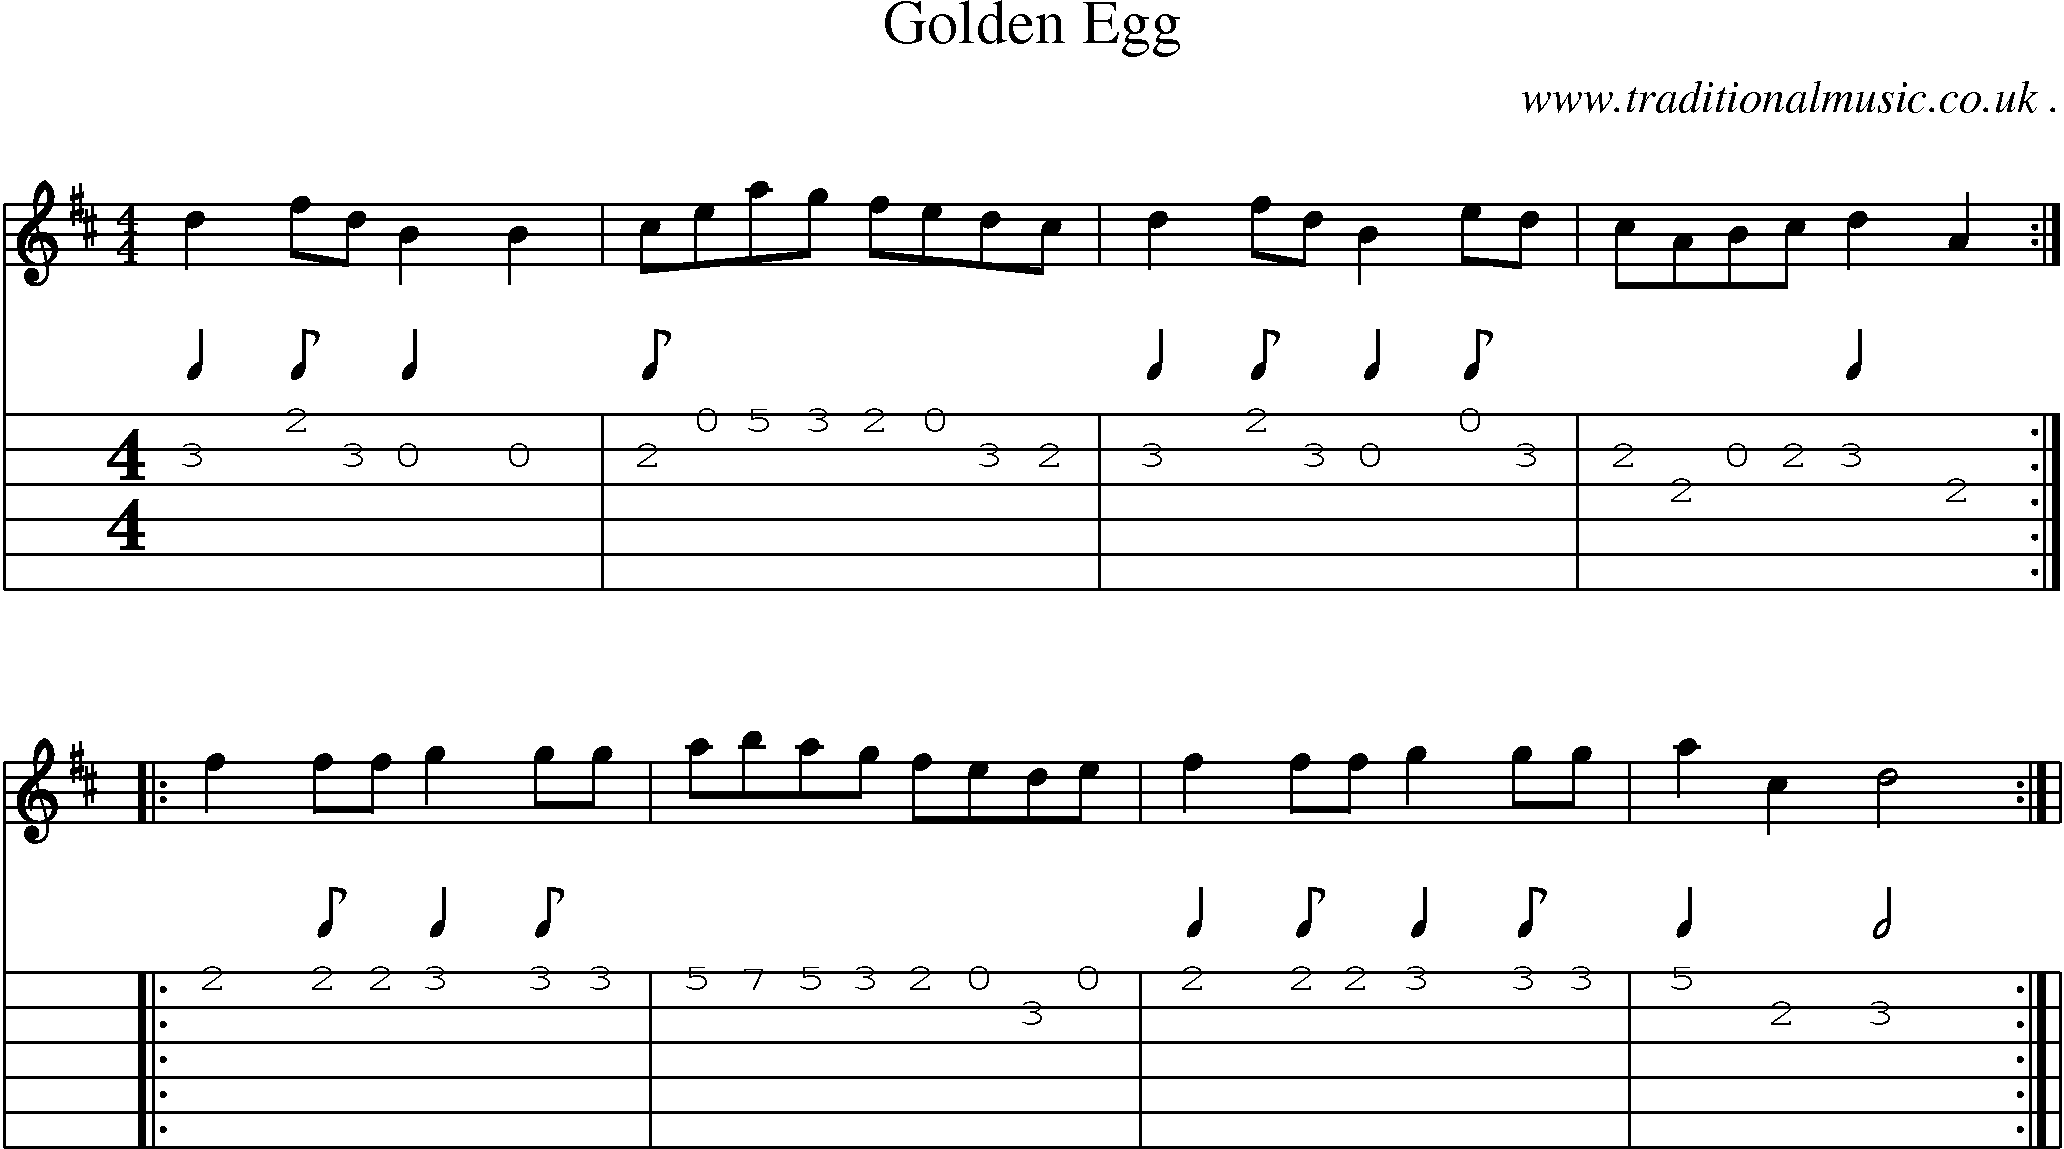 Sheet-Music and Guitar Tabs for Golden Egg